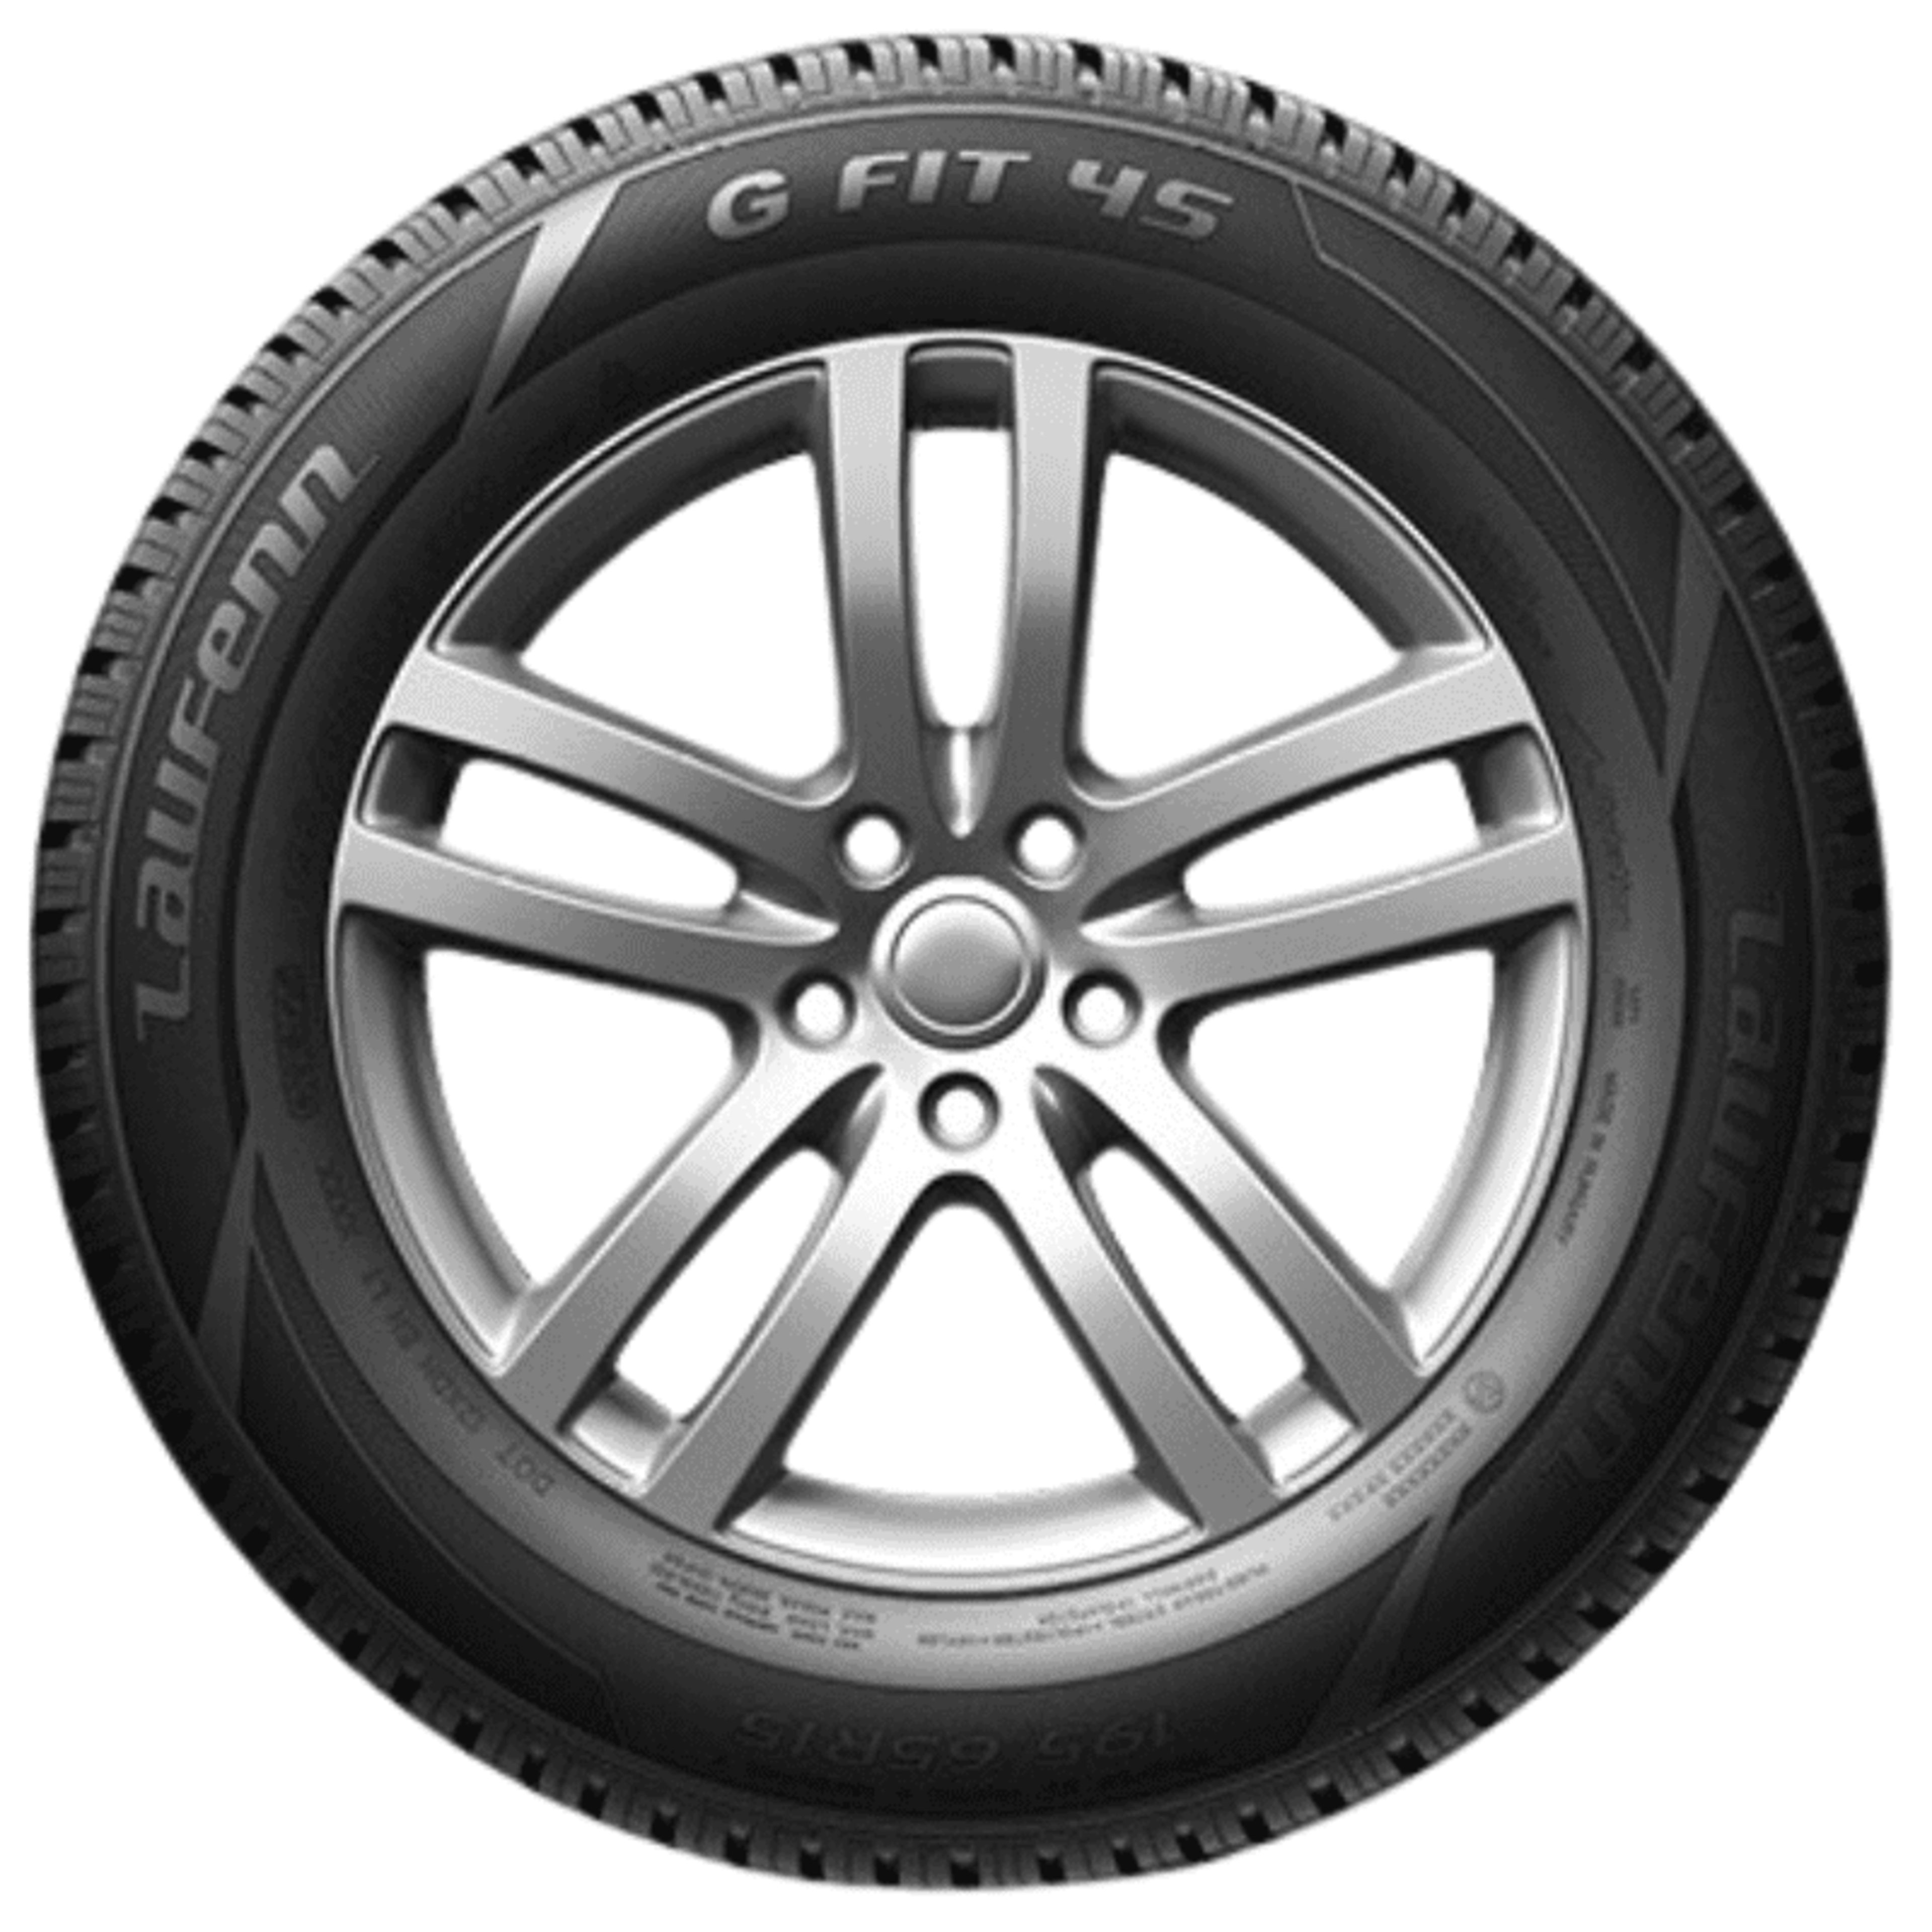 Buy Laufenn SimpleTire FIT 4S G Tires Online 